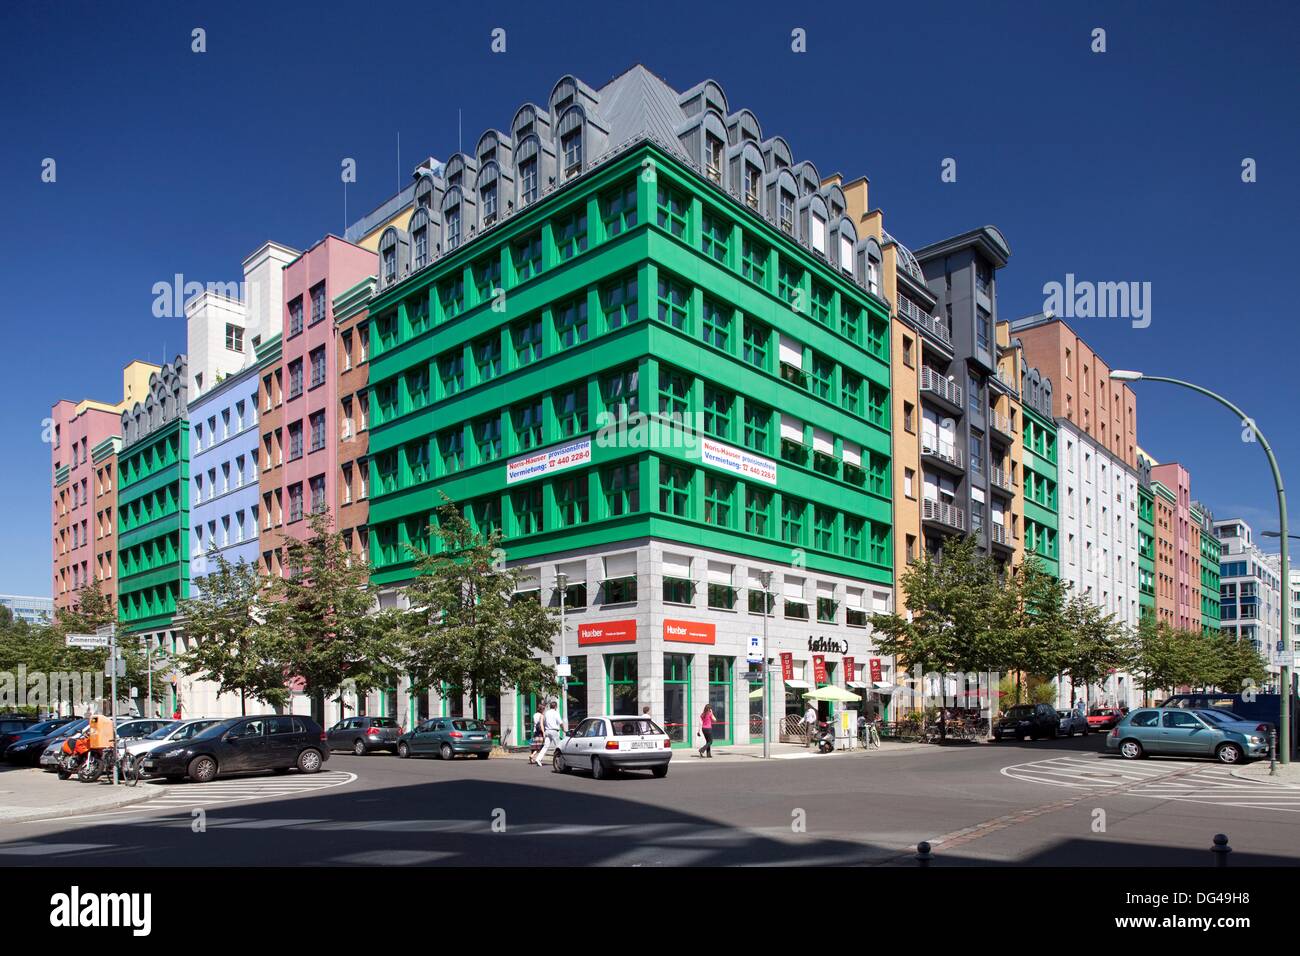 Quartier Schutzenstrasse Postmodernist Building By Aldo Rossi Stock Photo Alamy